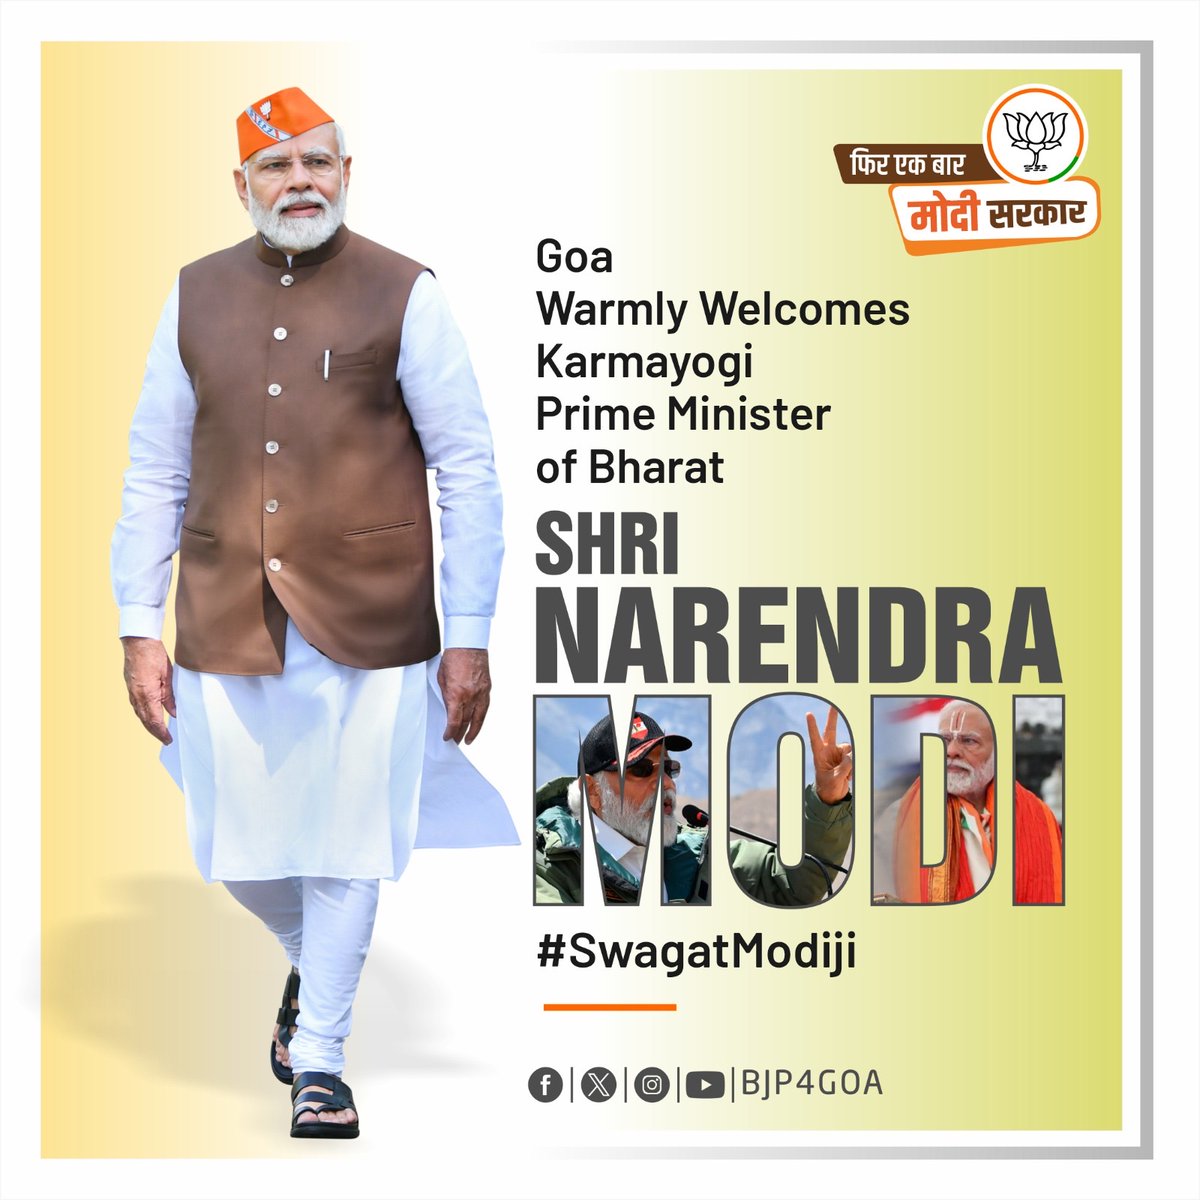 Let’s accord the Warmest Goan Welcome to the KarmaYogi Prime Minister Shri @narendramodi Ji who’s brought Growth, Prosperity and Glory to the Nation. #SwagatModiji @BJP4Goa @BJP4India